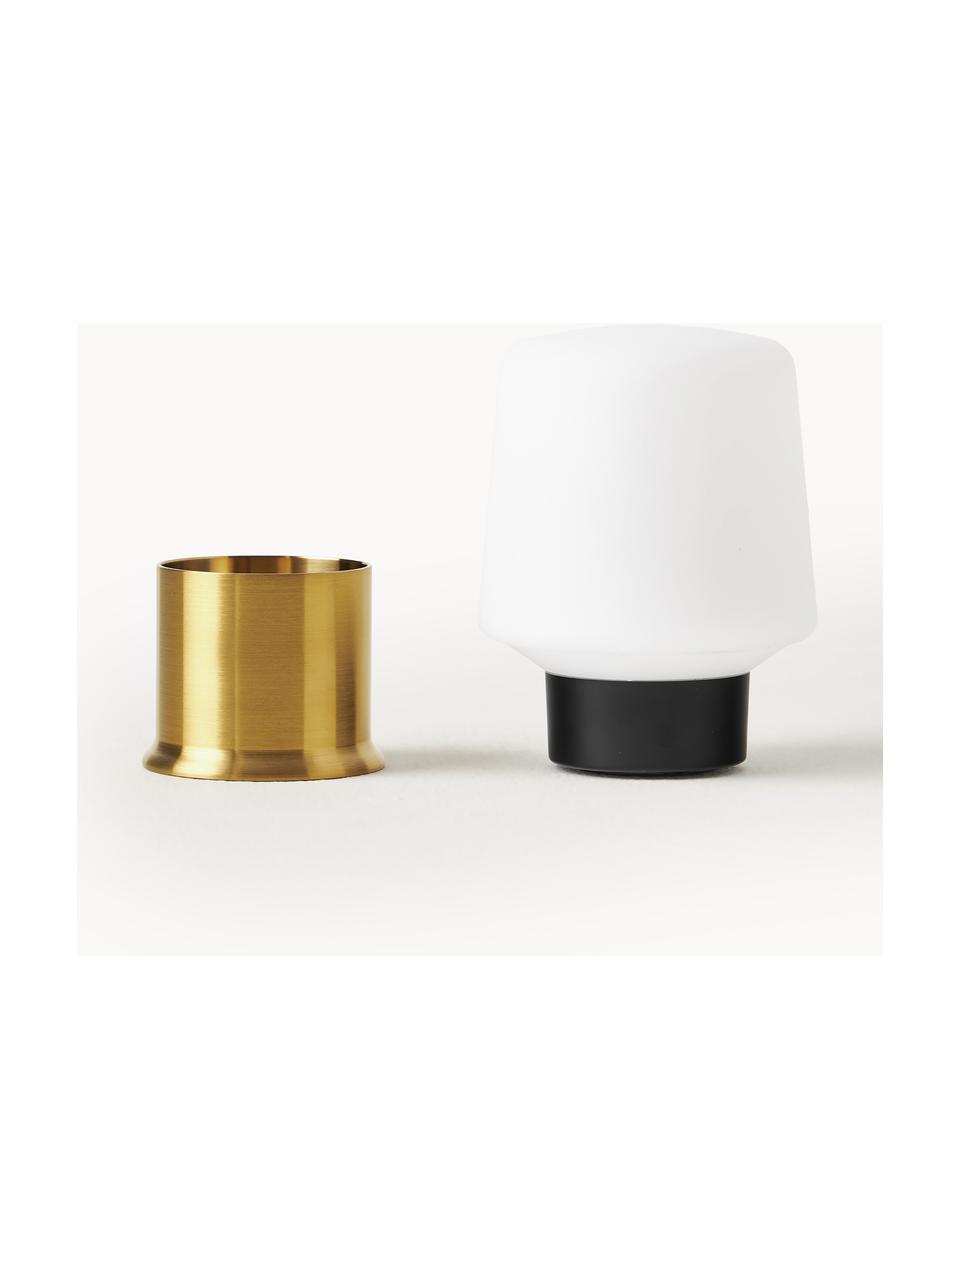 Mobile LED-Outdoor Tischlampe London, dimmbar, Kunststoff, Weiss, Goldfarben, Ø 9 x H 15 cm